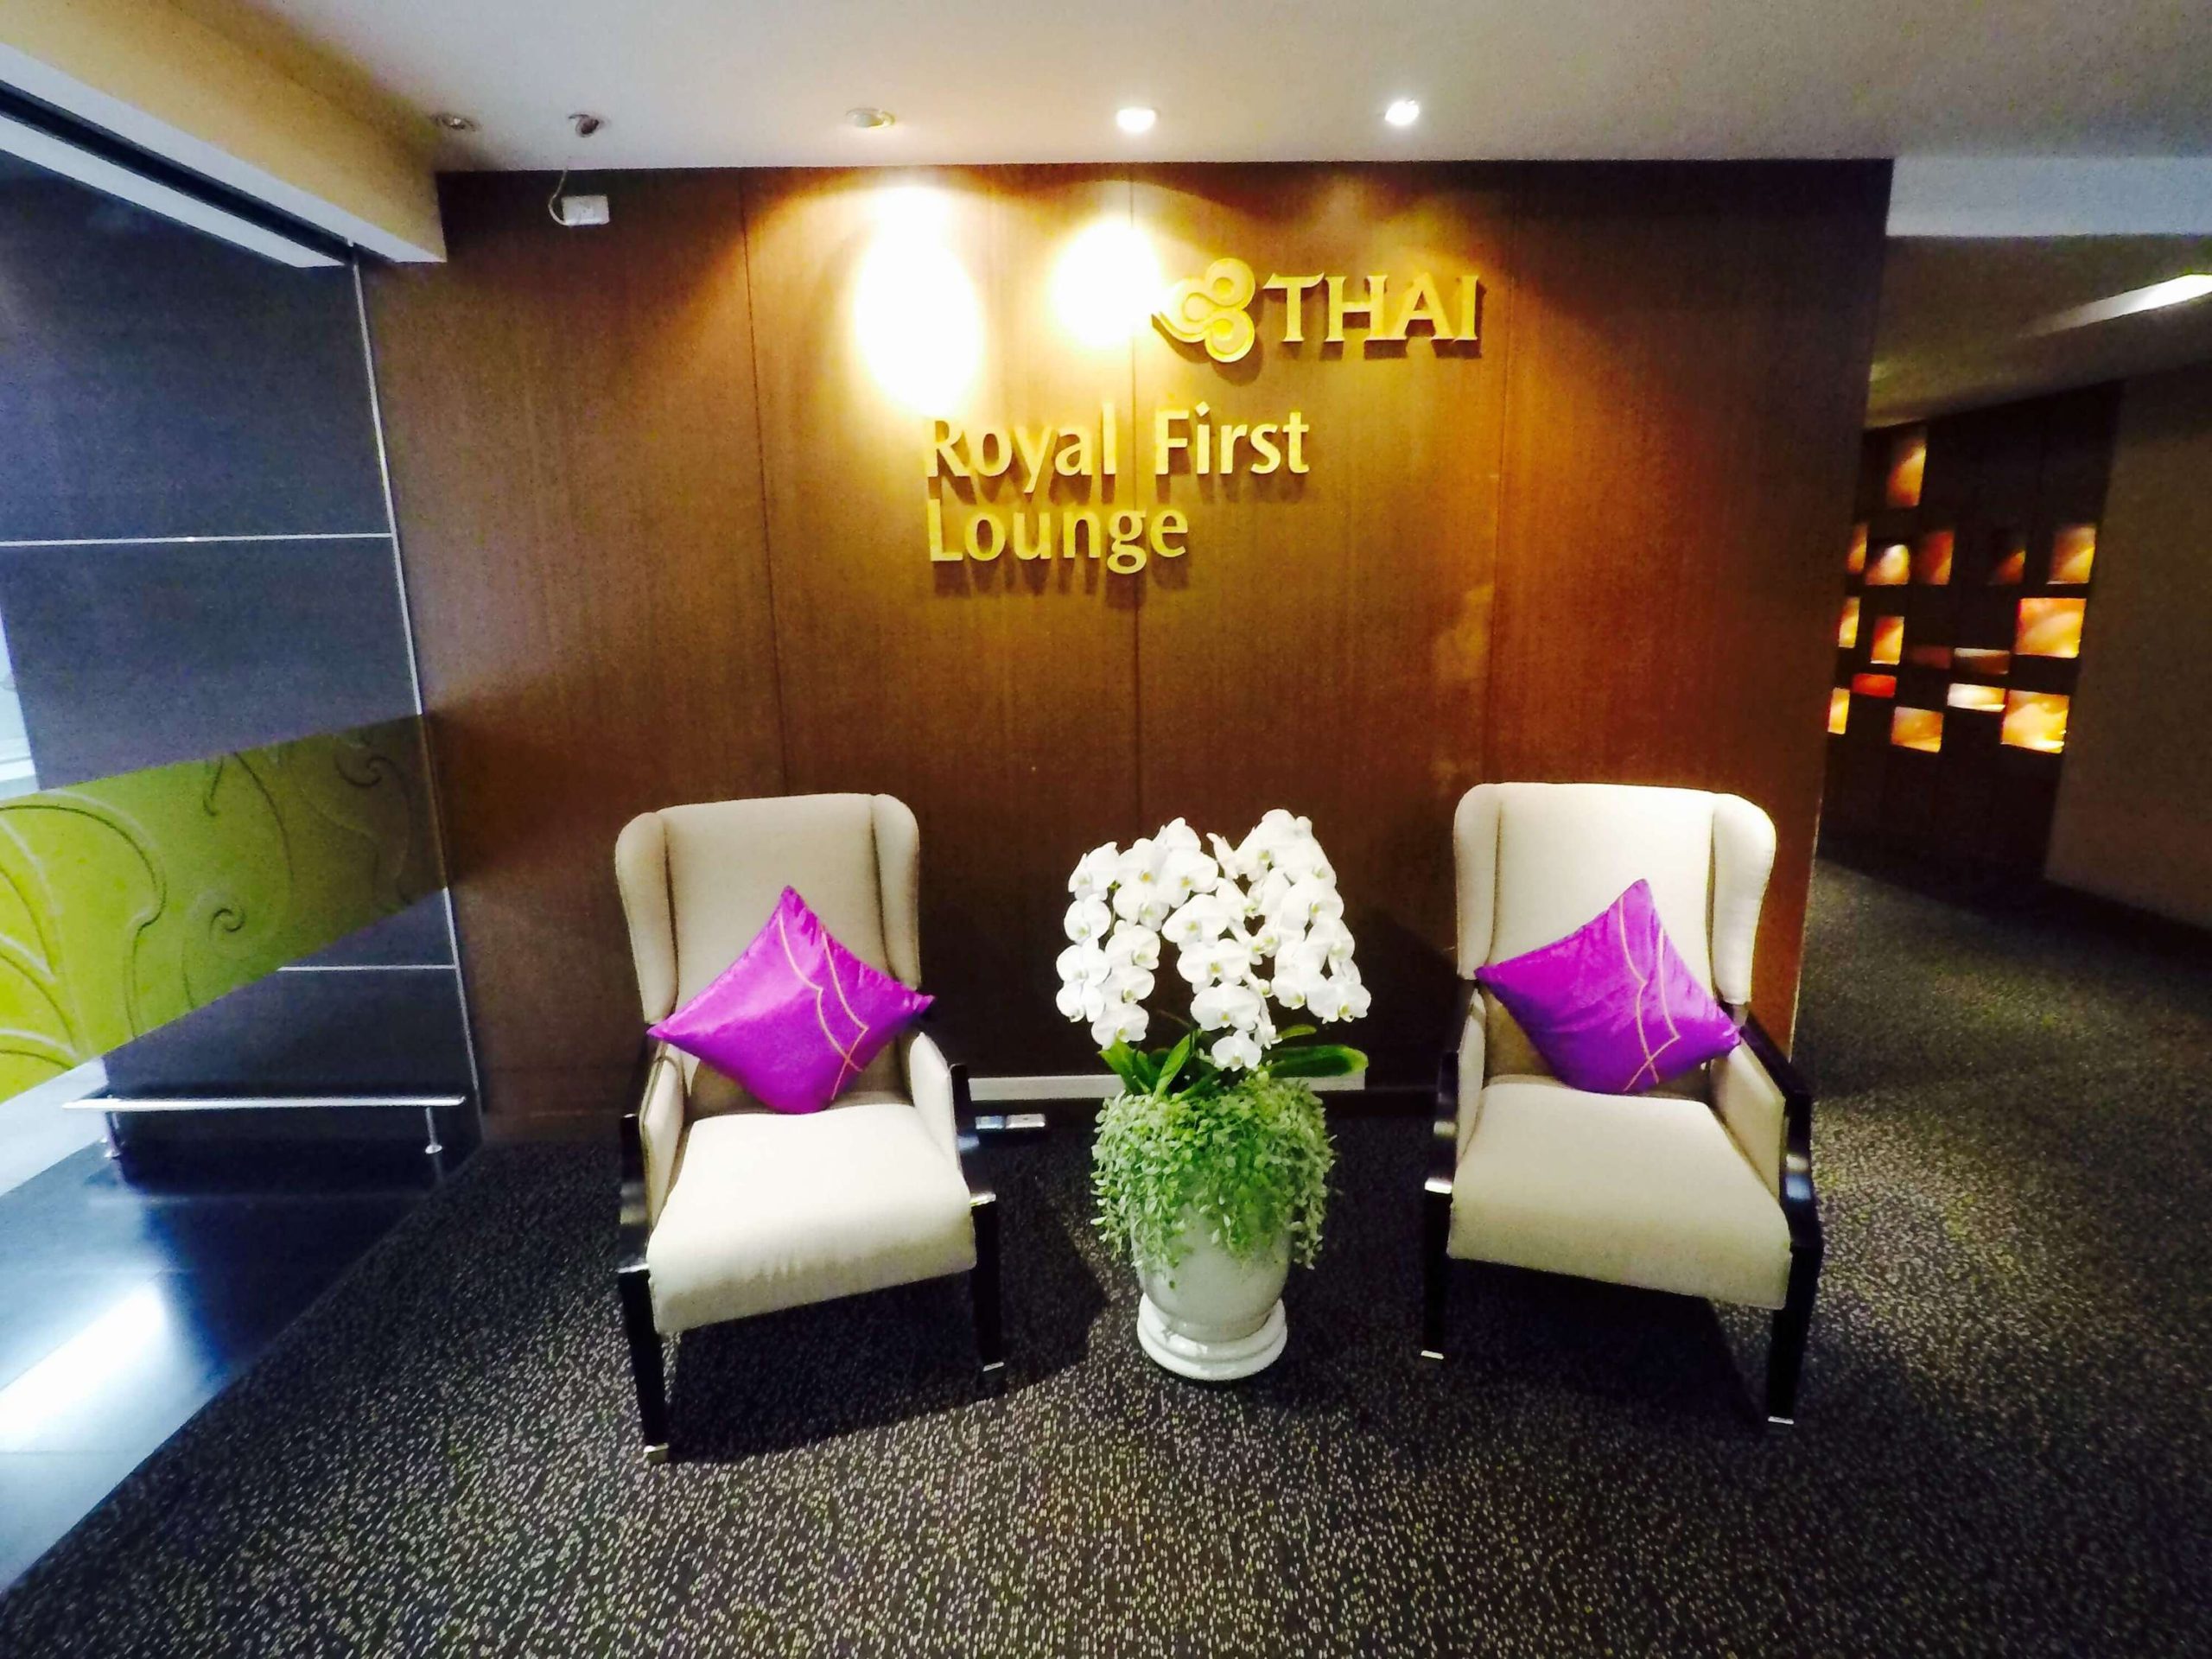 Thai Royal First Class lounge